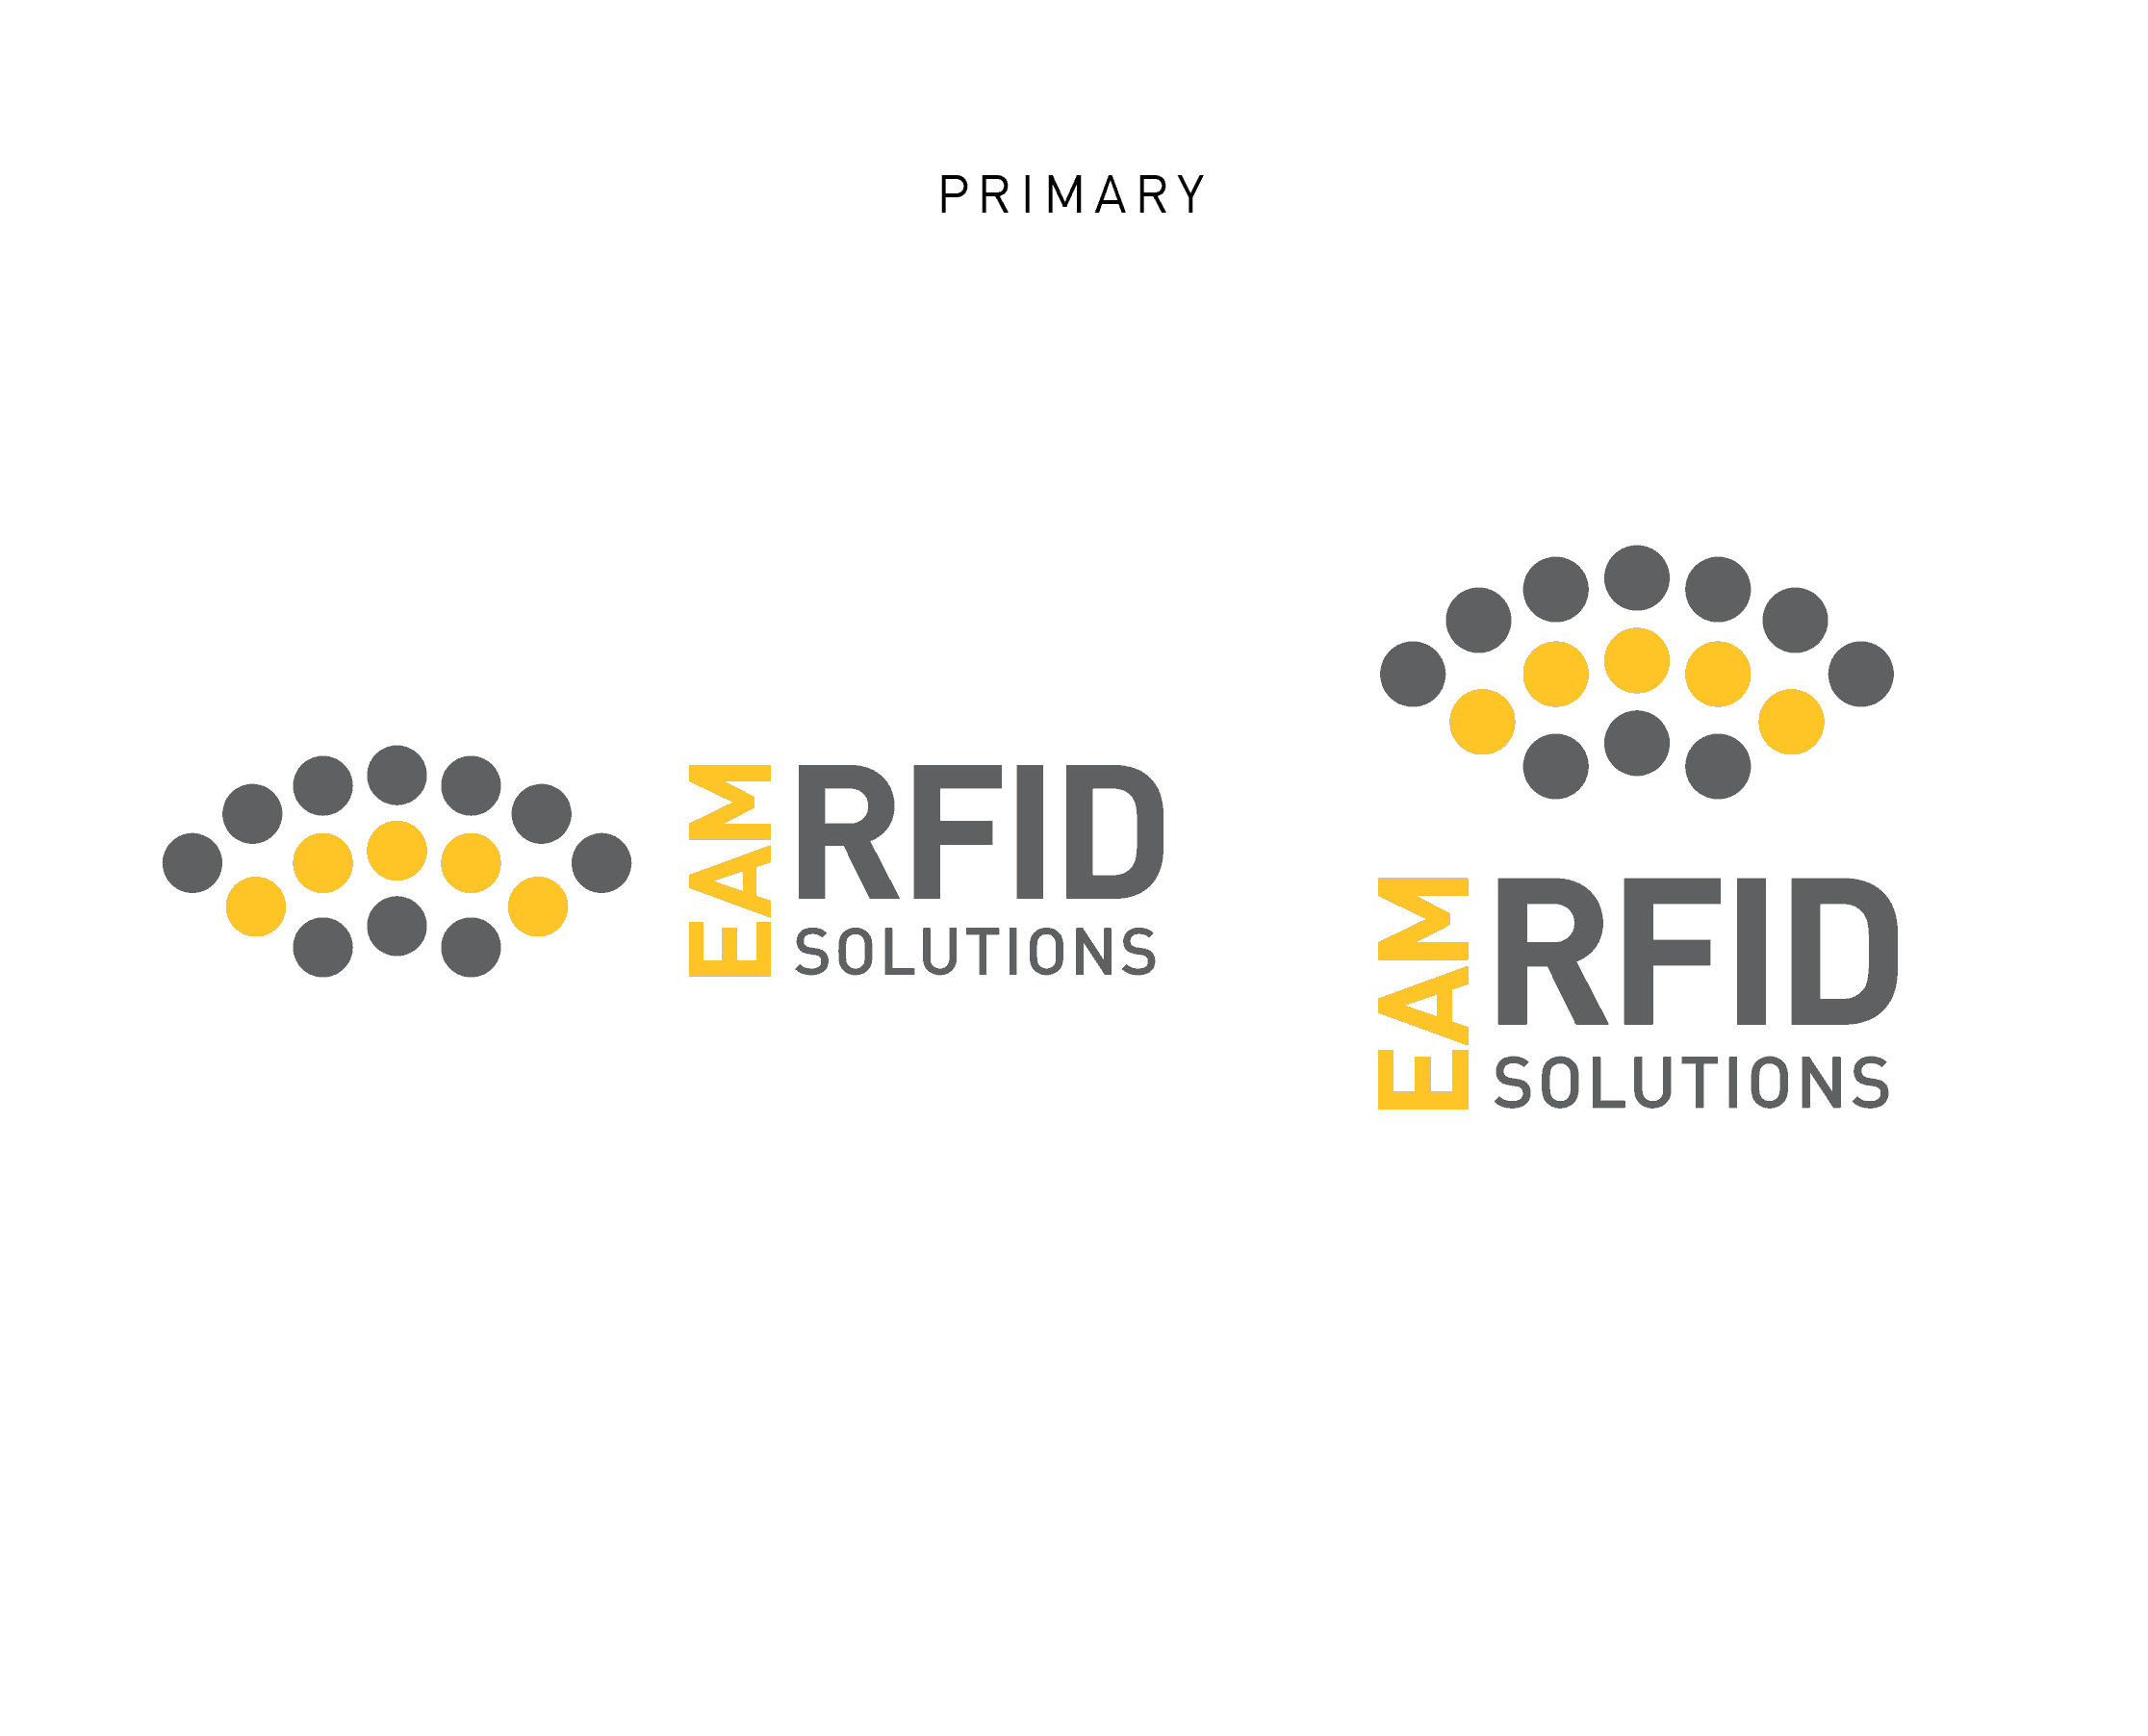 EAM RFID primary logo usage